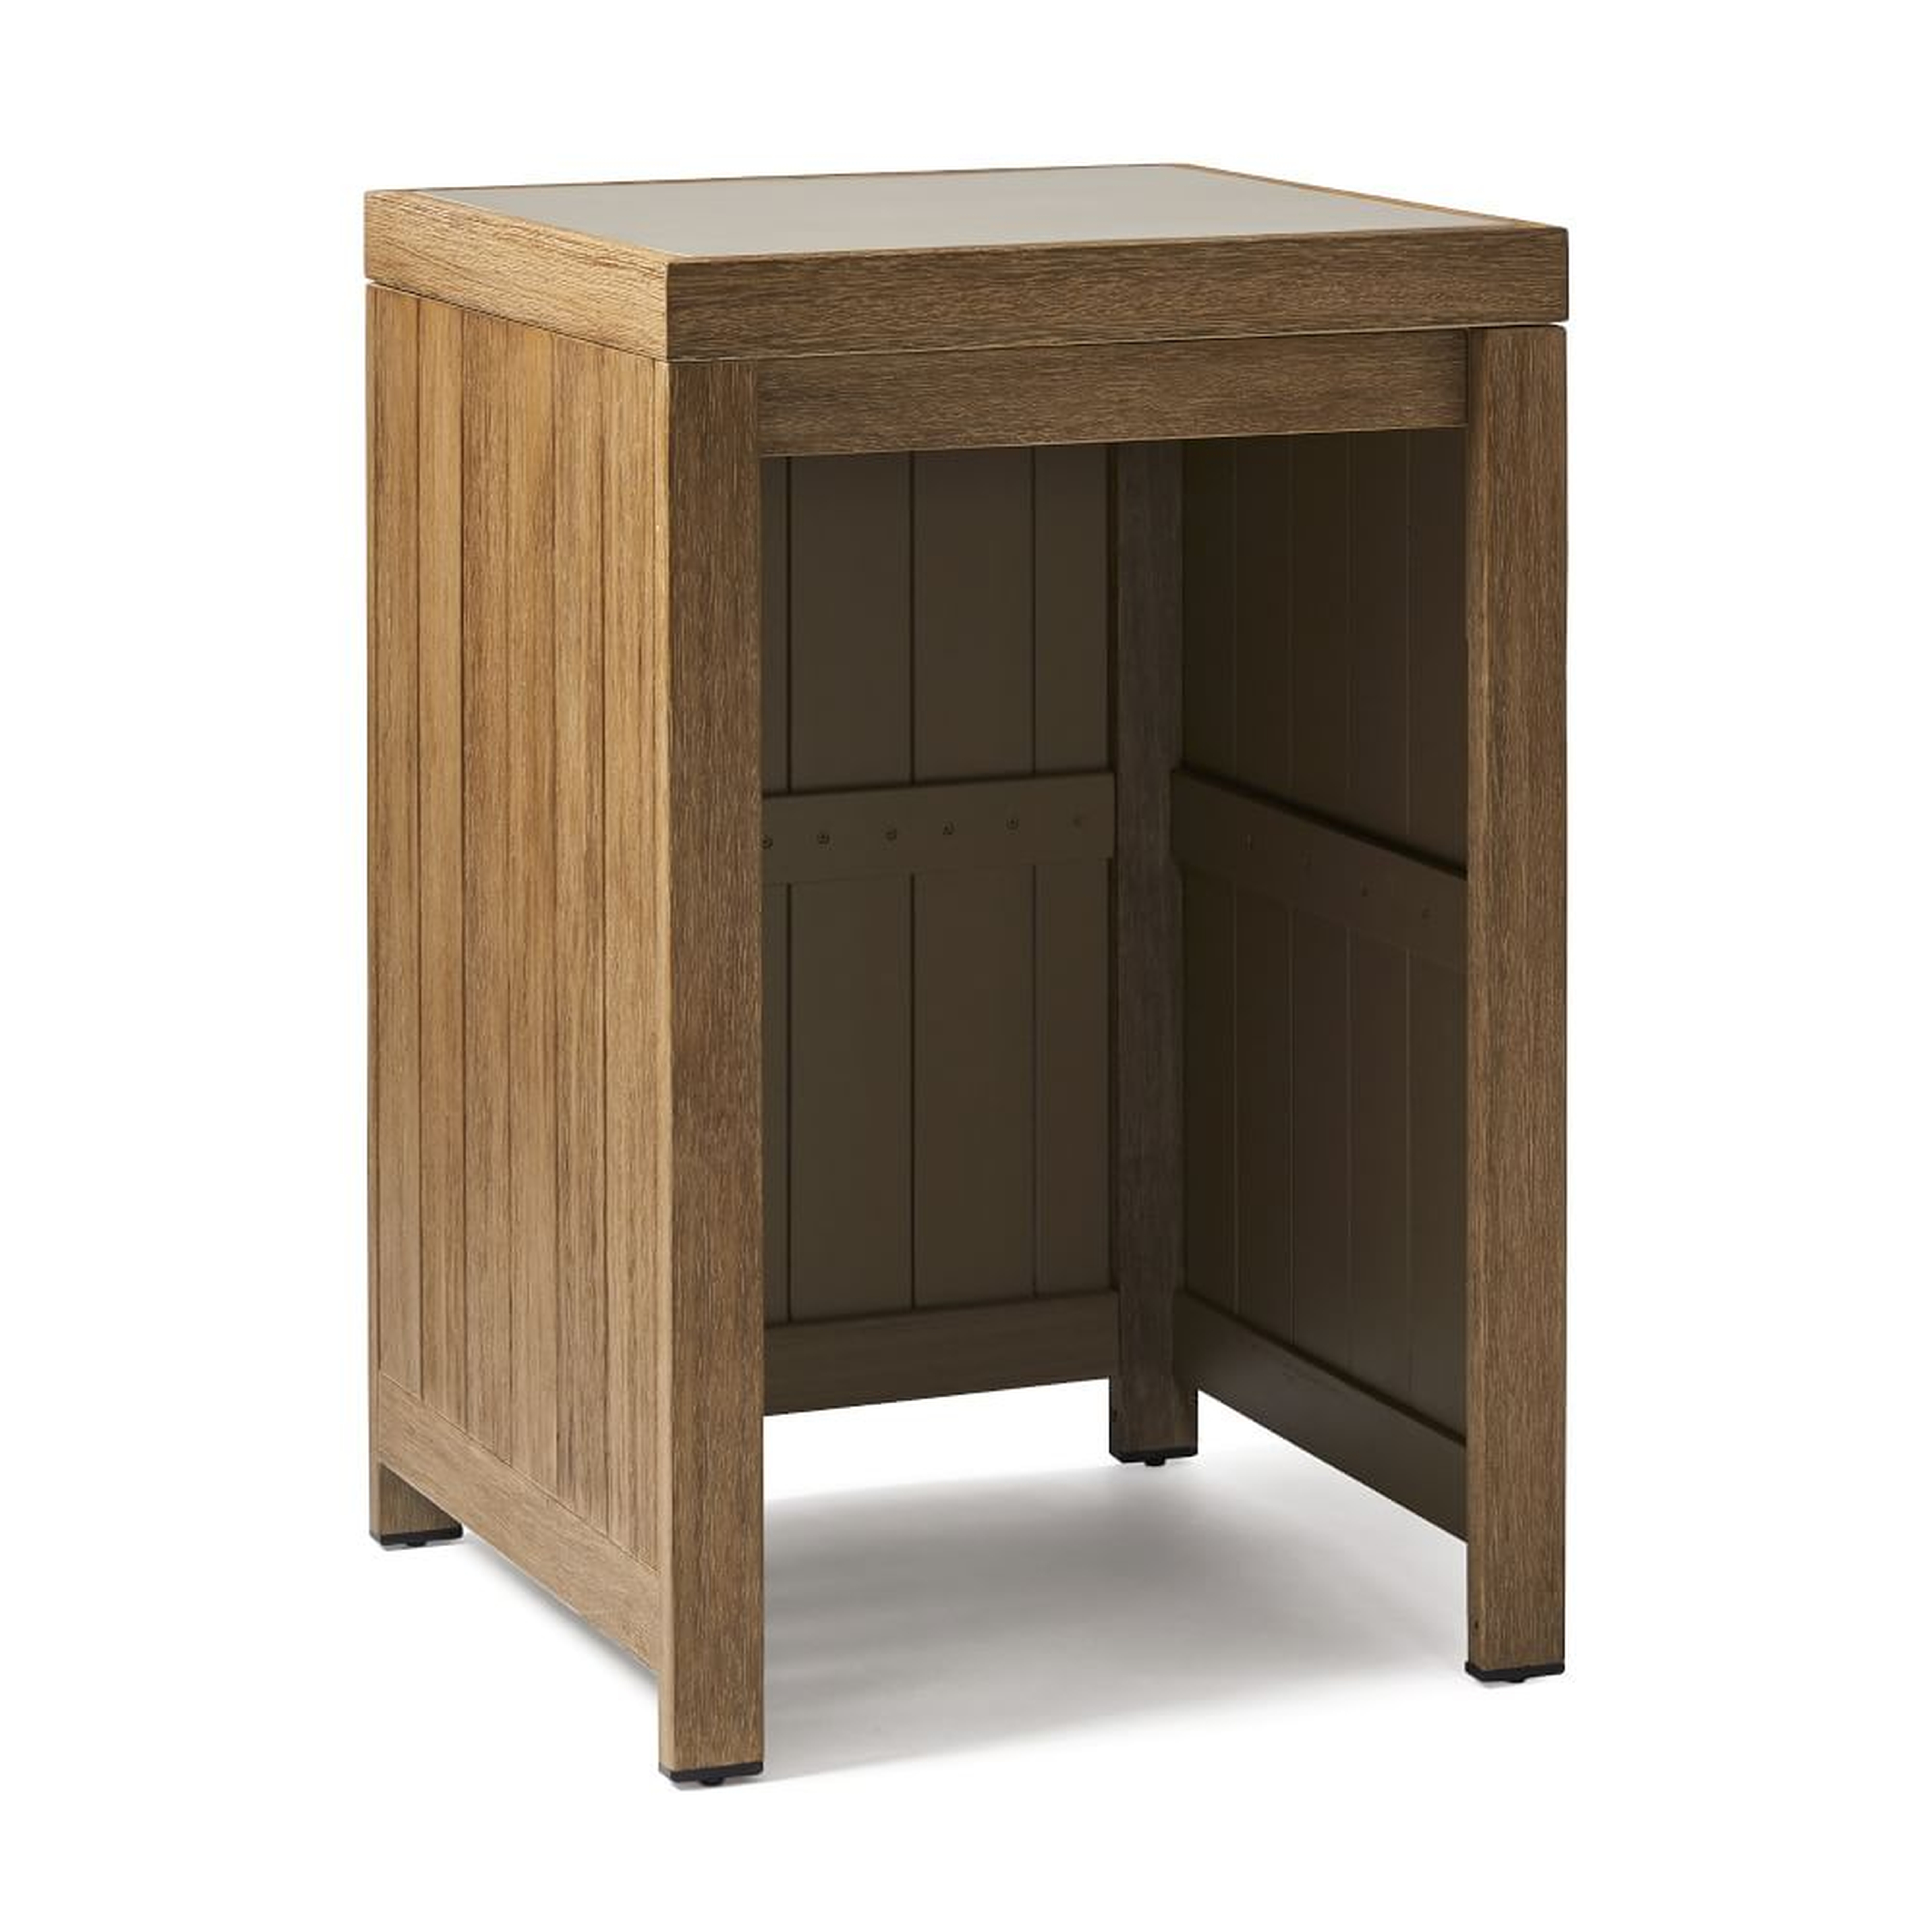 Portside Outdoor Corner Cabinet, Driftwood - West Elm